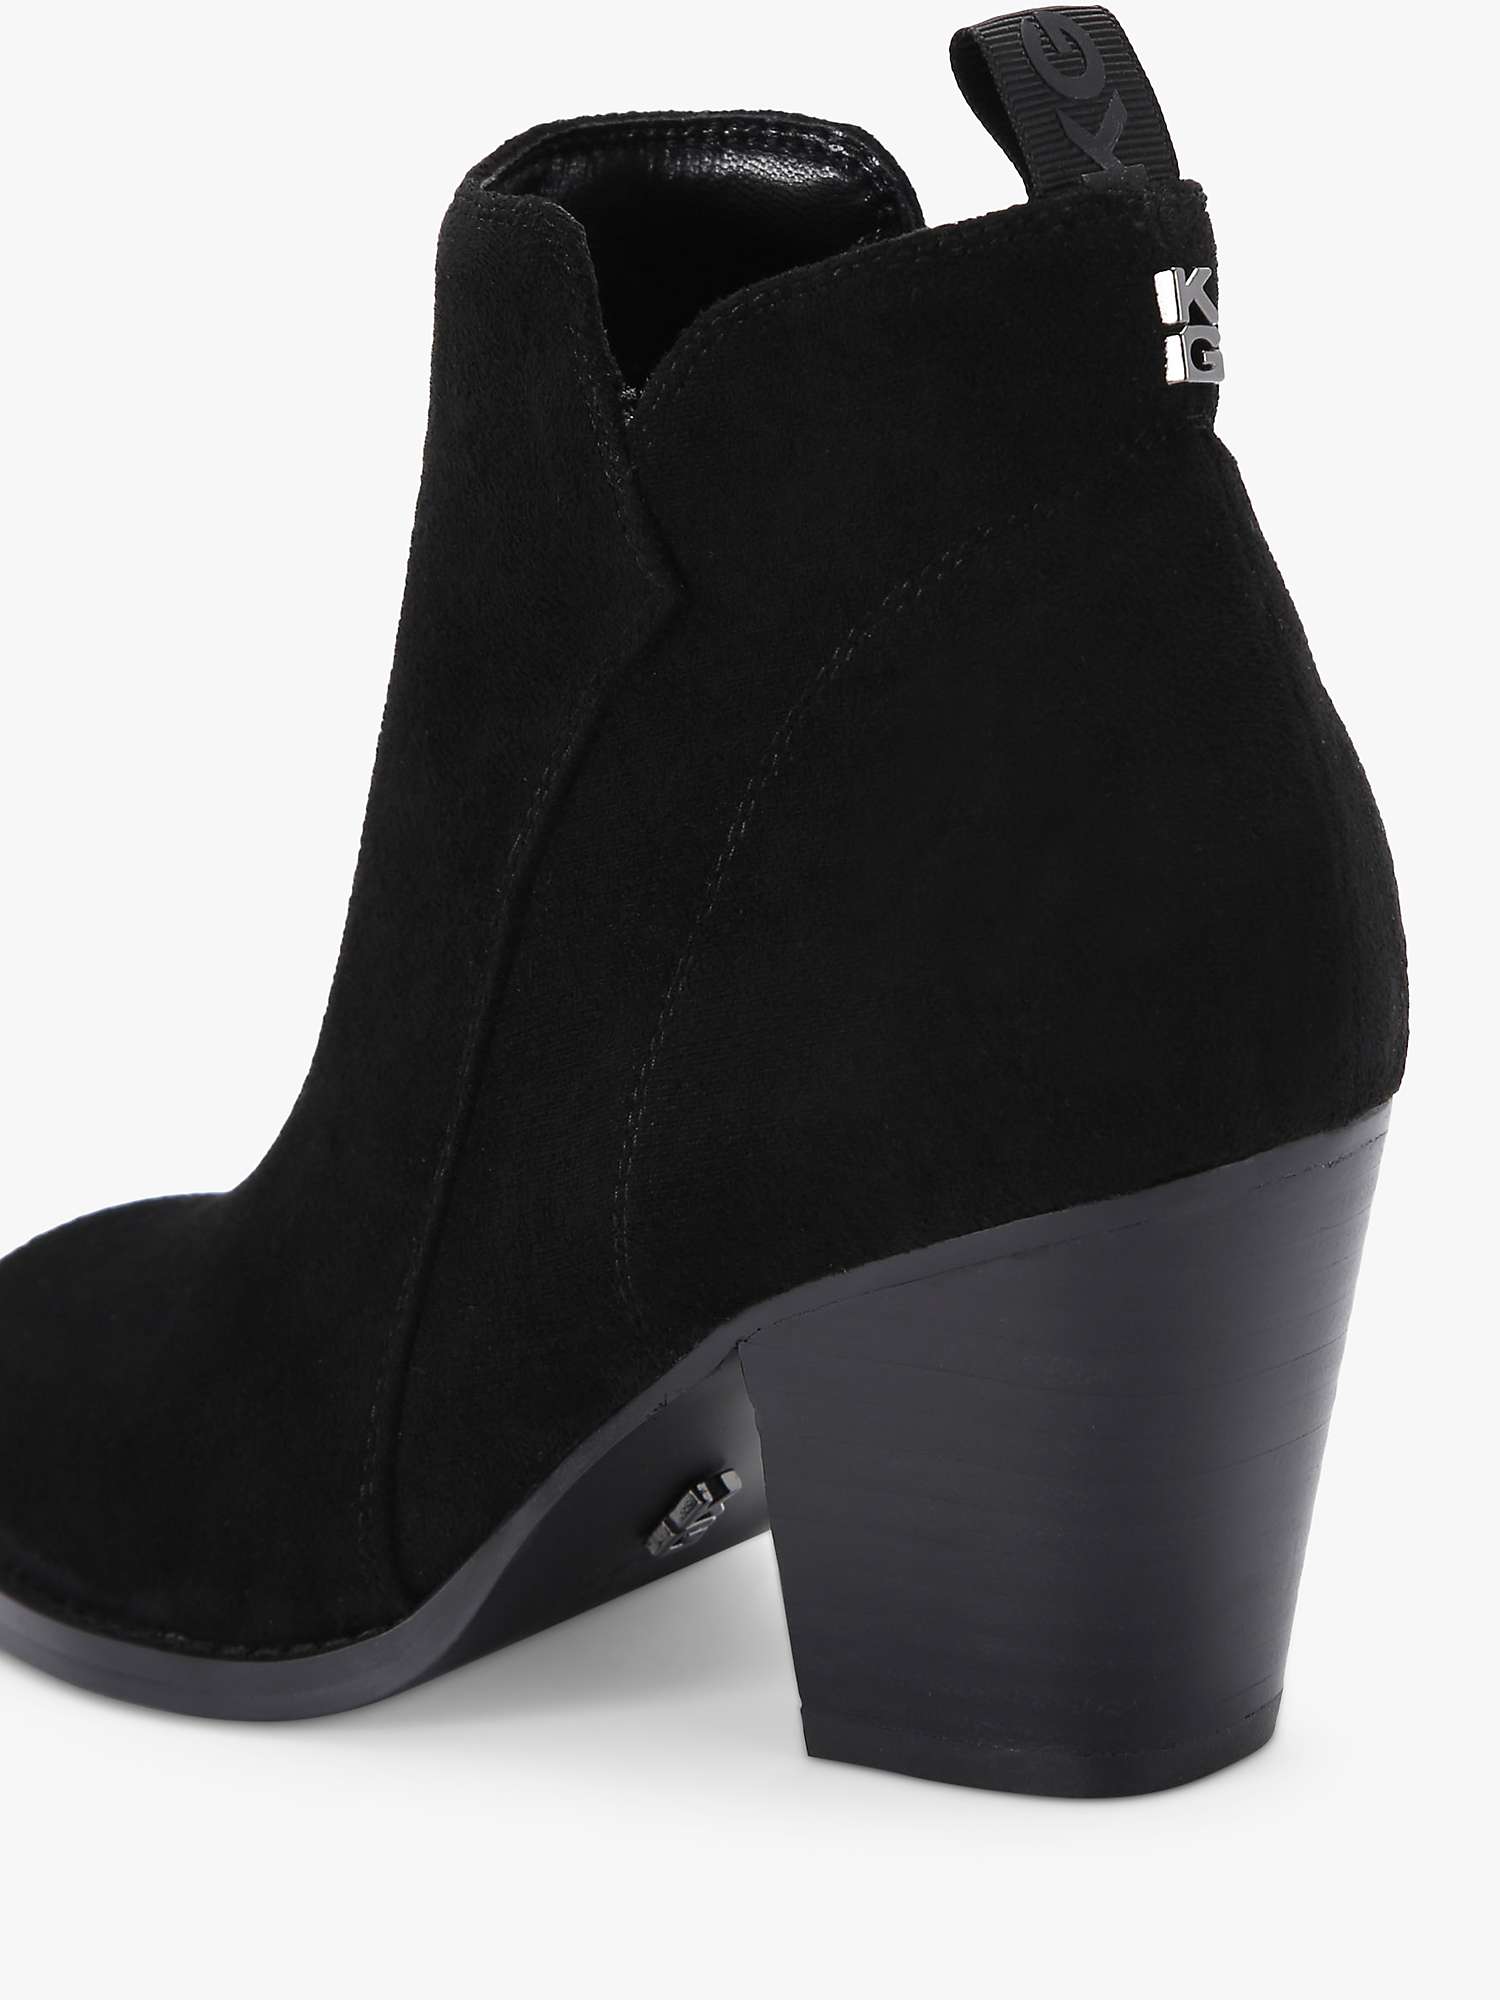 Buy KG Kurt Geiger Stone Suede Ankle Boots, Black Online at johnlewis.com